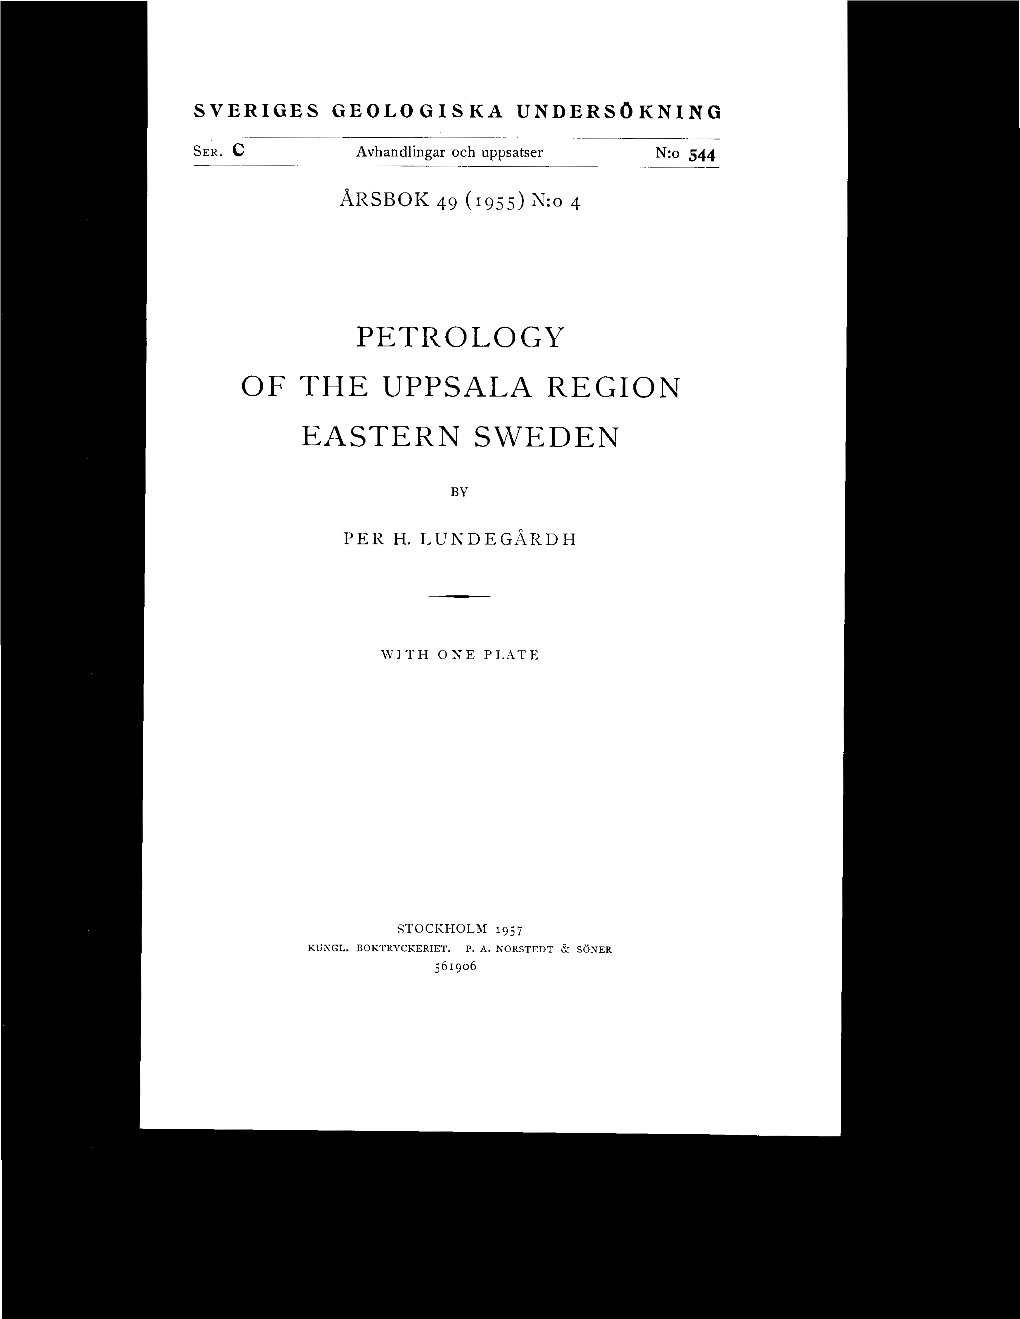 Petrology of the Uppsala Region Eastern Sweden